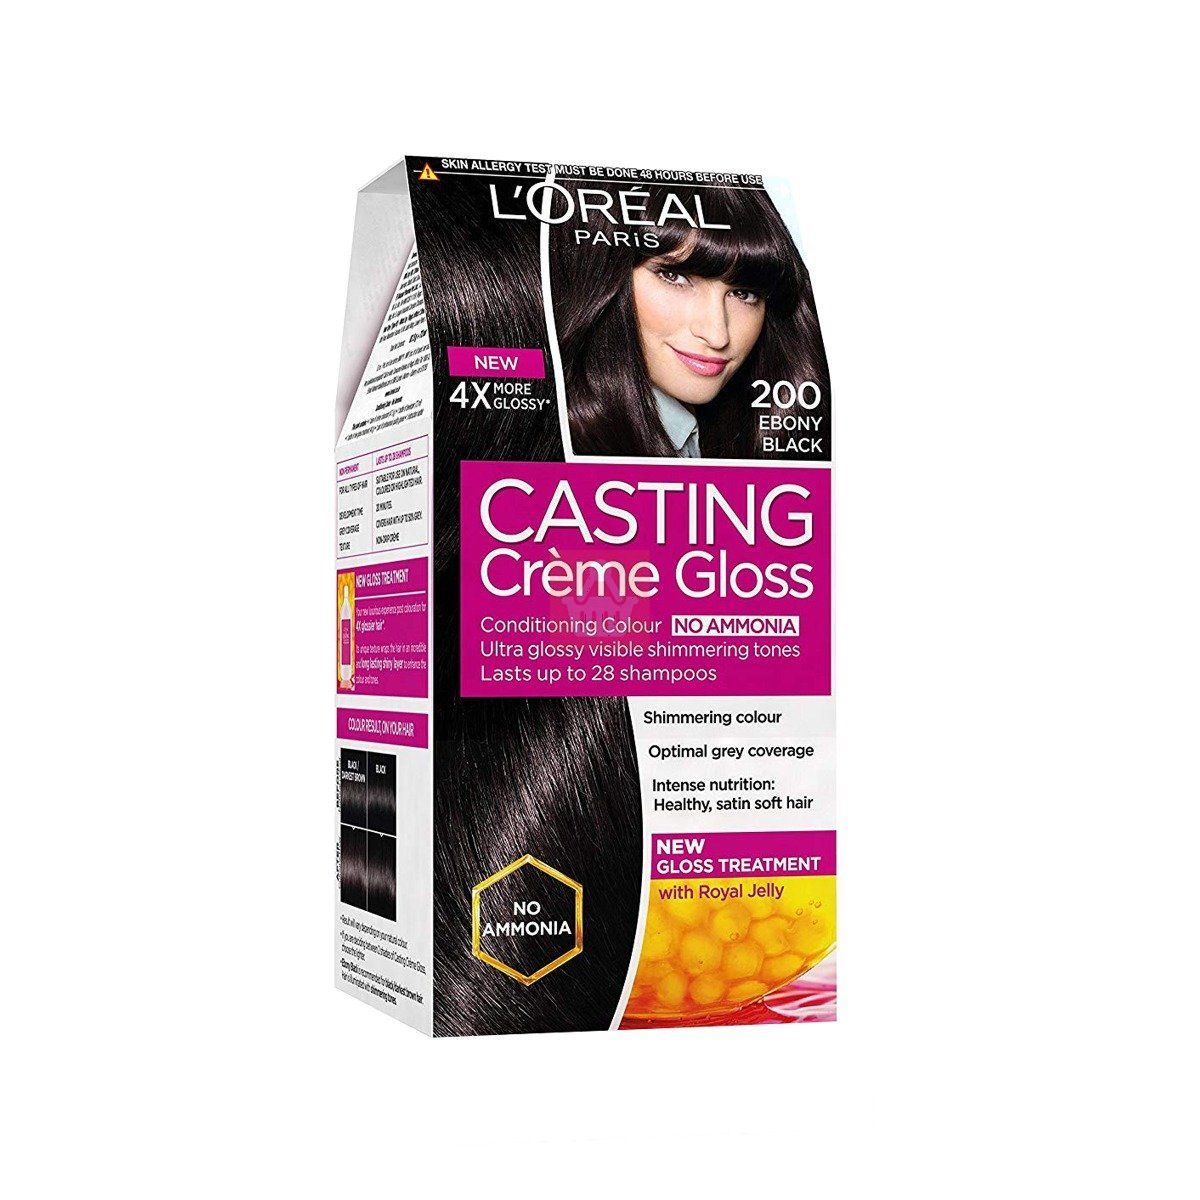 L'Oreal Casting Creme Gloss No Ammonia Hair Color - 200 Ebony Black -24ml